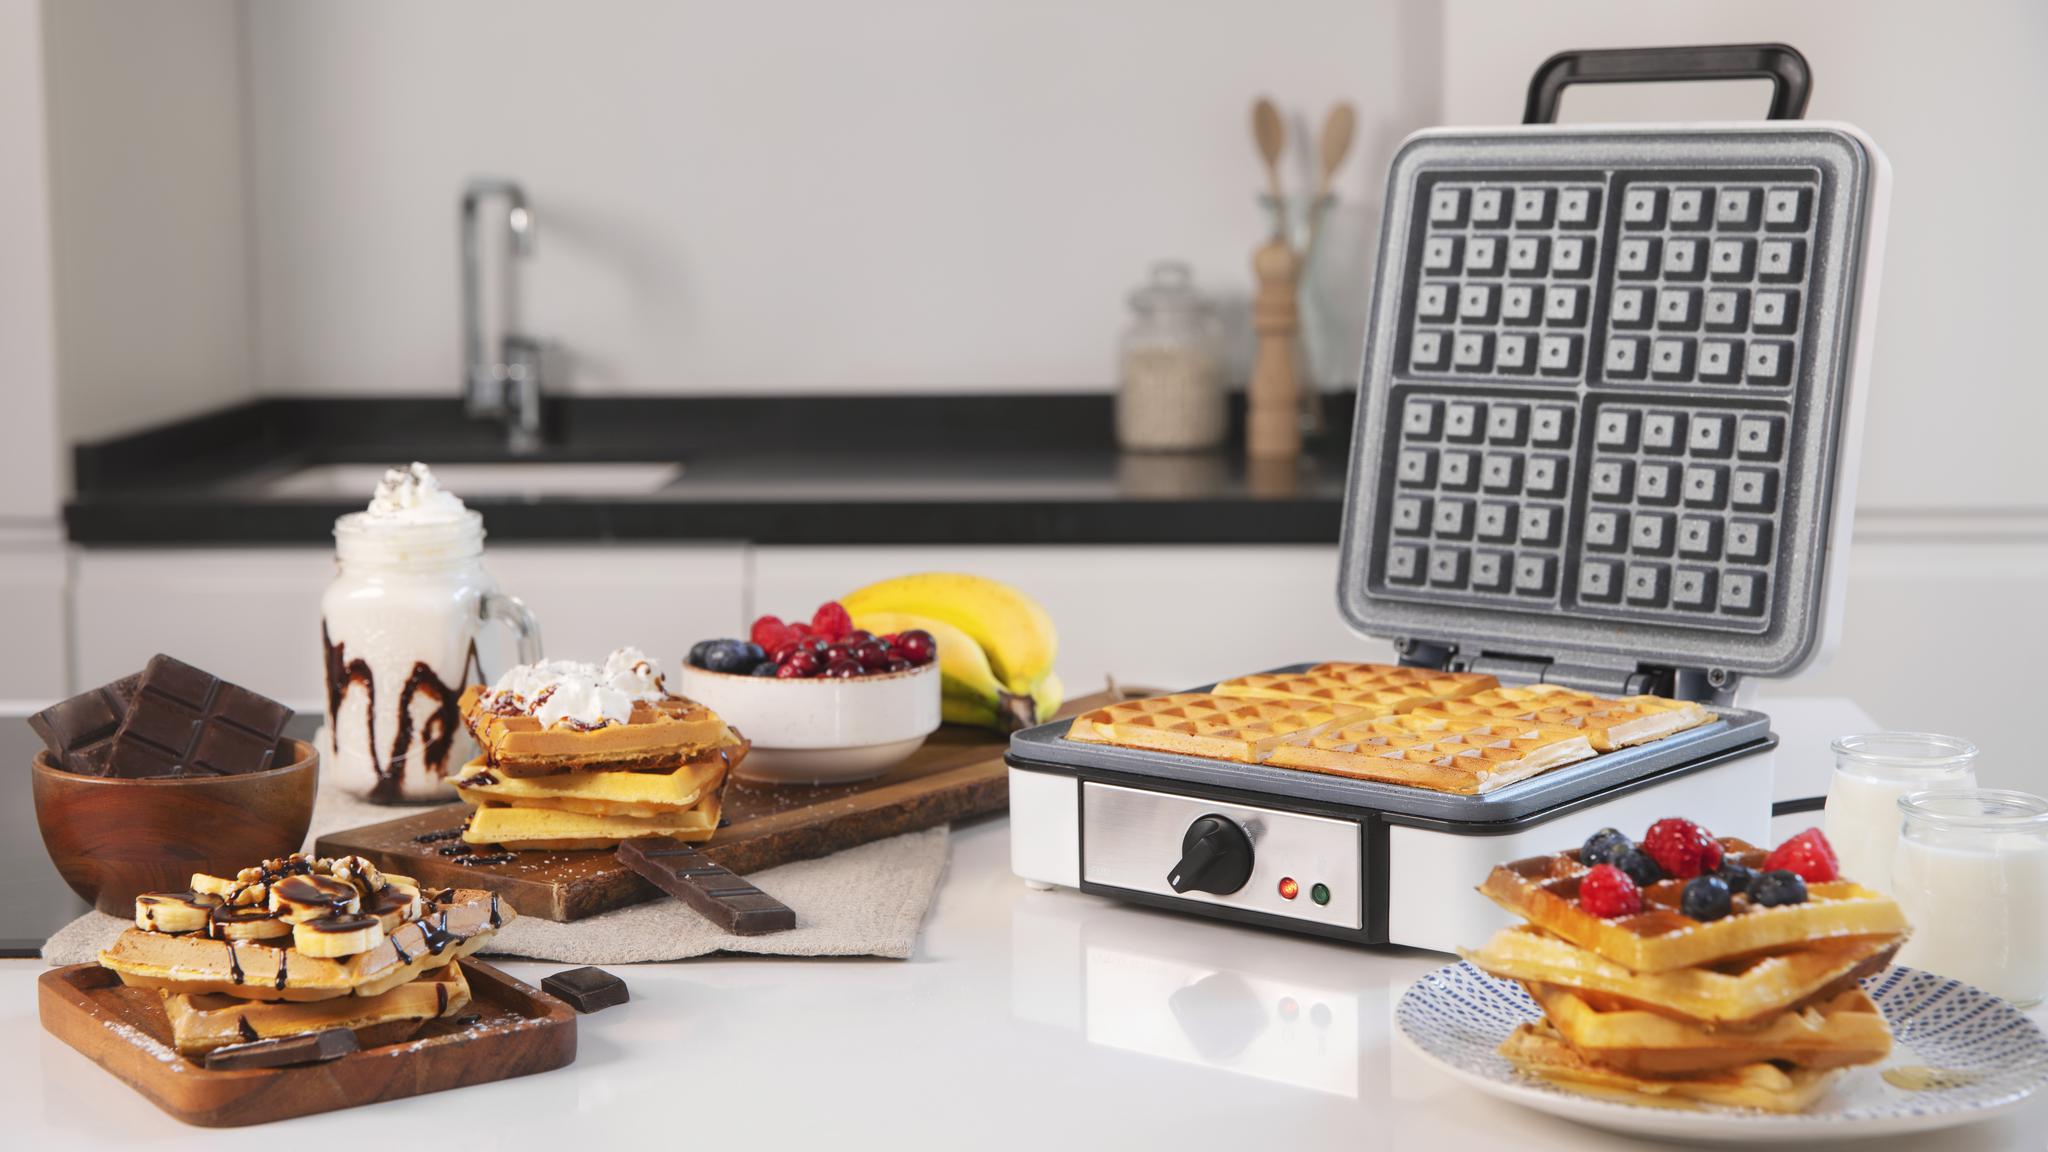 Piastra elettrica per waffle dal design elegante.